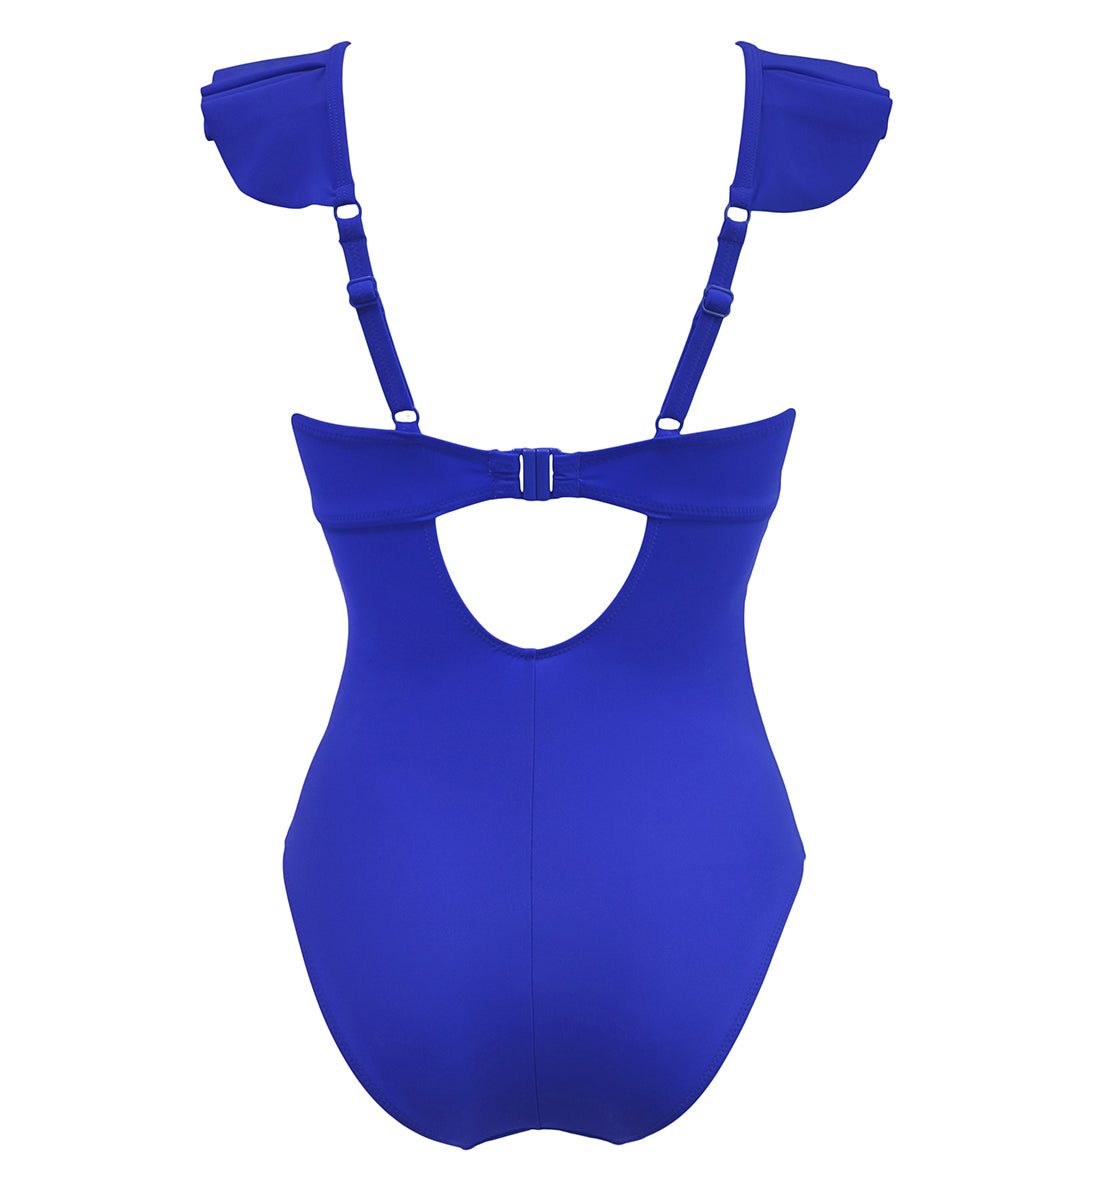 Pour Moi Space Frill Non Wire Swimsuit (18106),Small,Ultramarine - Ultramarine,Small